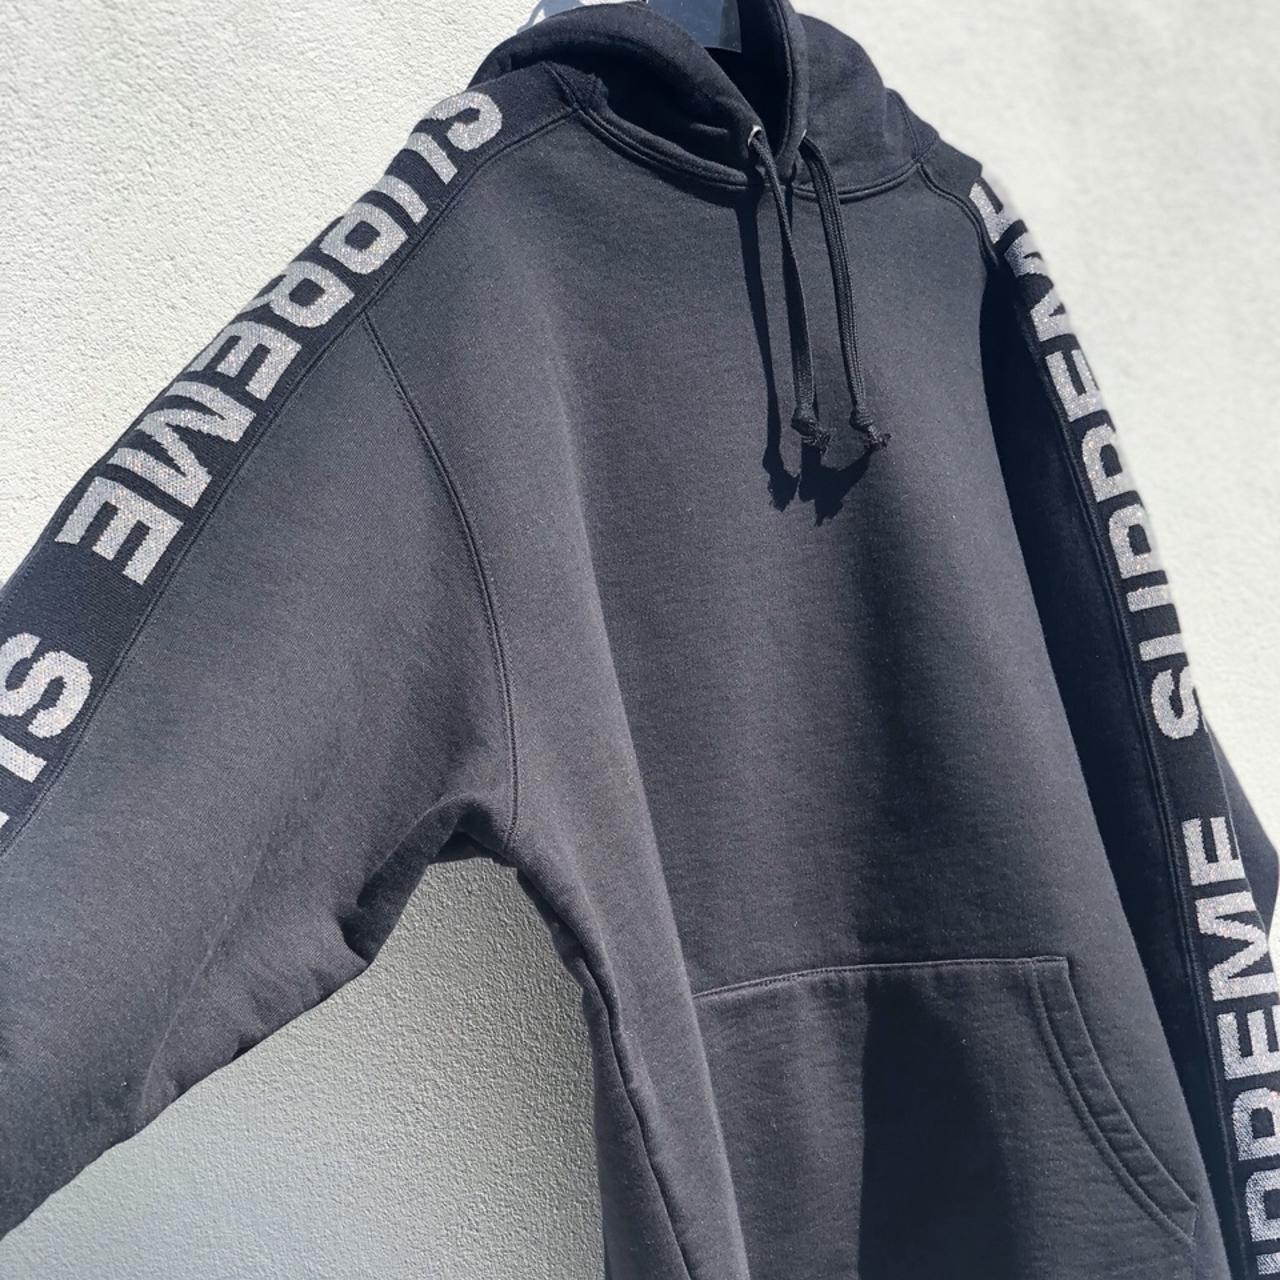 SS20 Supreme Metallic Rib fuschia hooded sweatshirt size XL hoodie